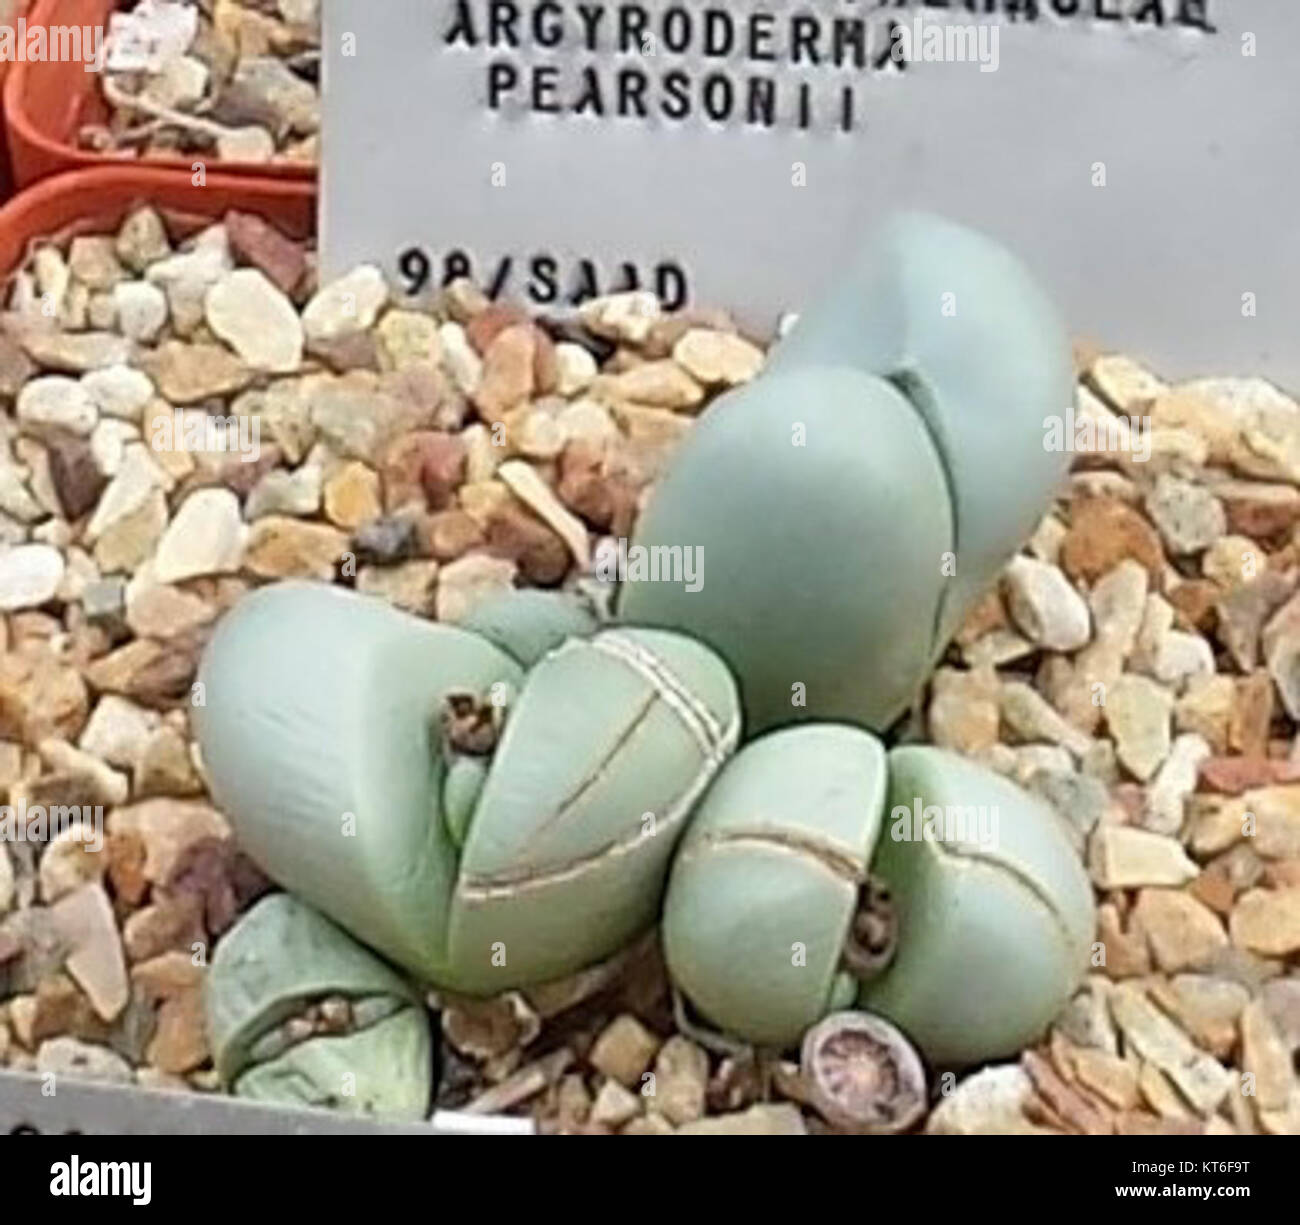 Argyroderma pearsonii - RSA5 Stock Photo